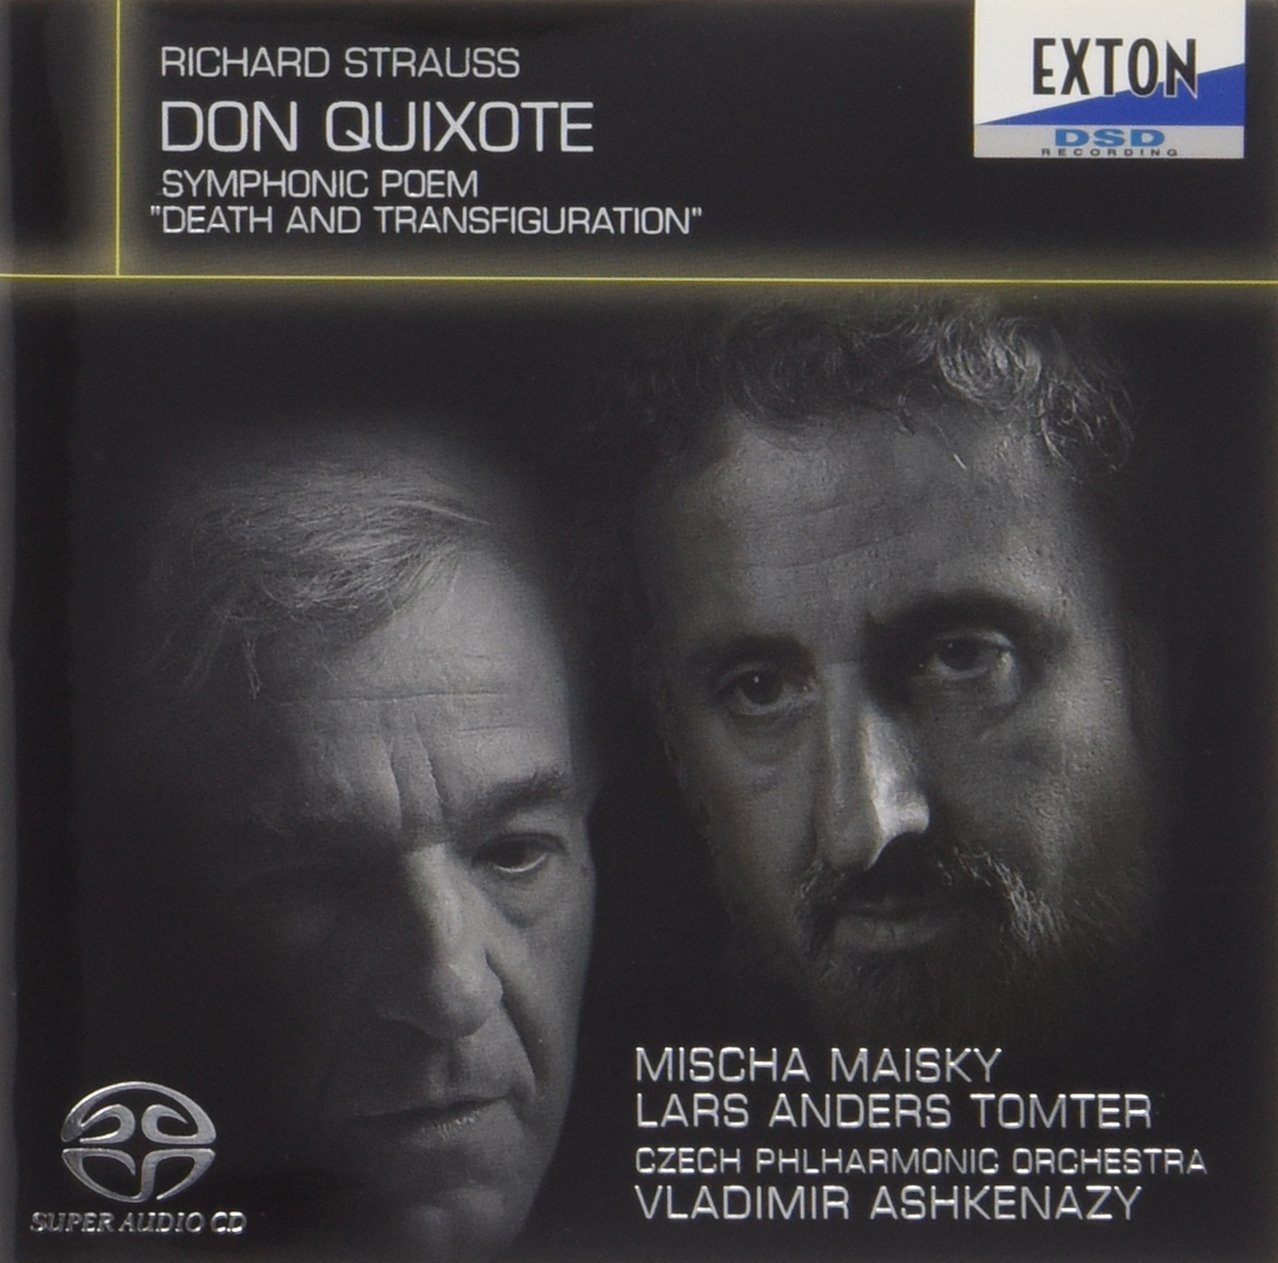 Mischa Maisky, Lars Anders Tomter, Czech PO, Vladimir Ashkenazy – Strauss: Don Quixote (2001/2009) SACD ISO + Hi-Res FLAC